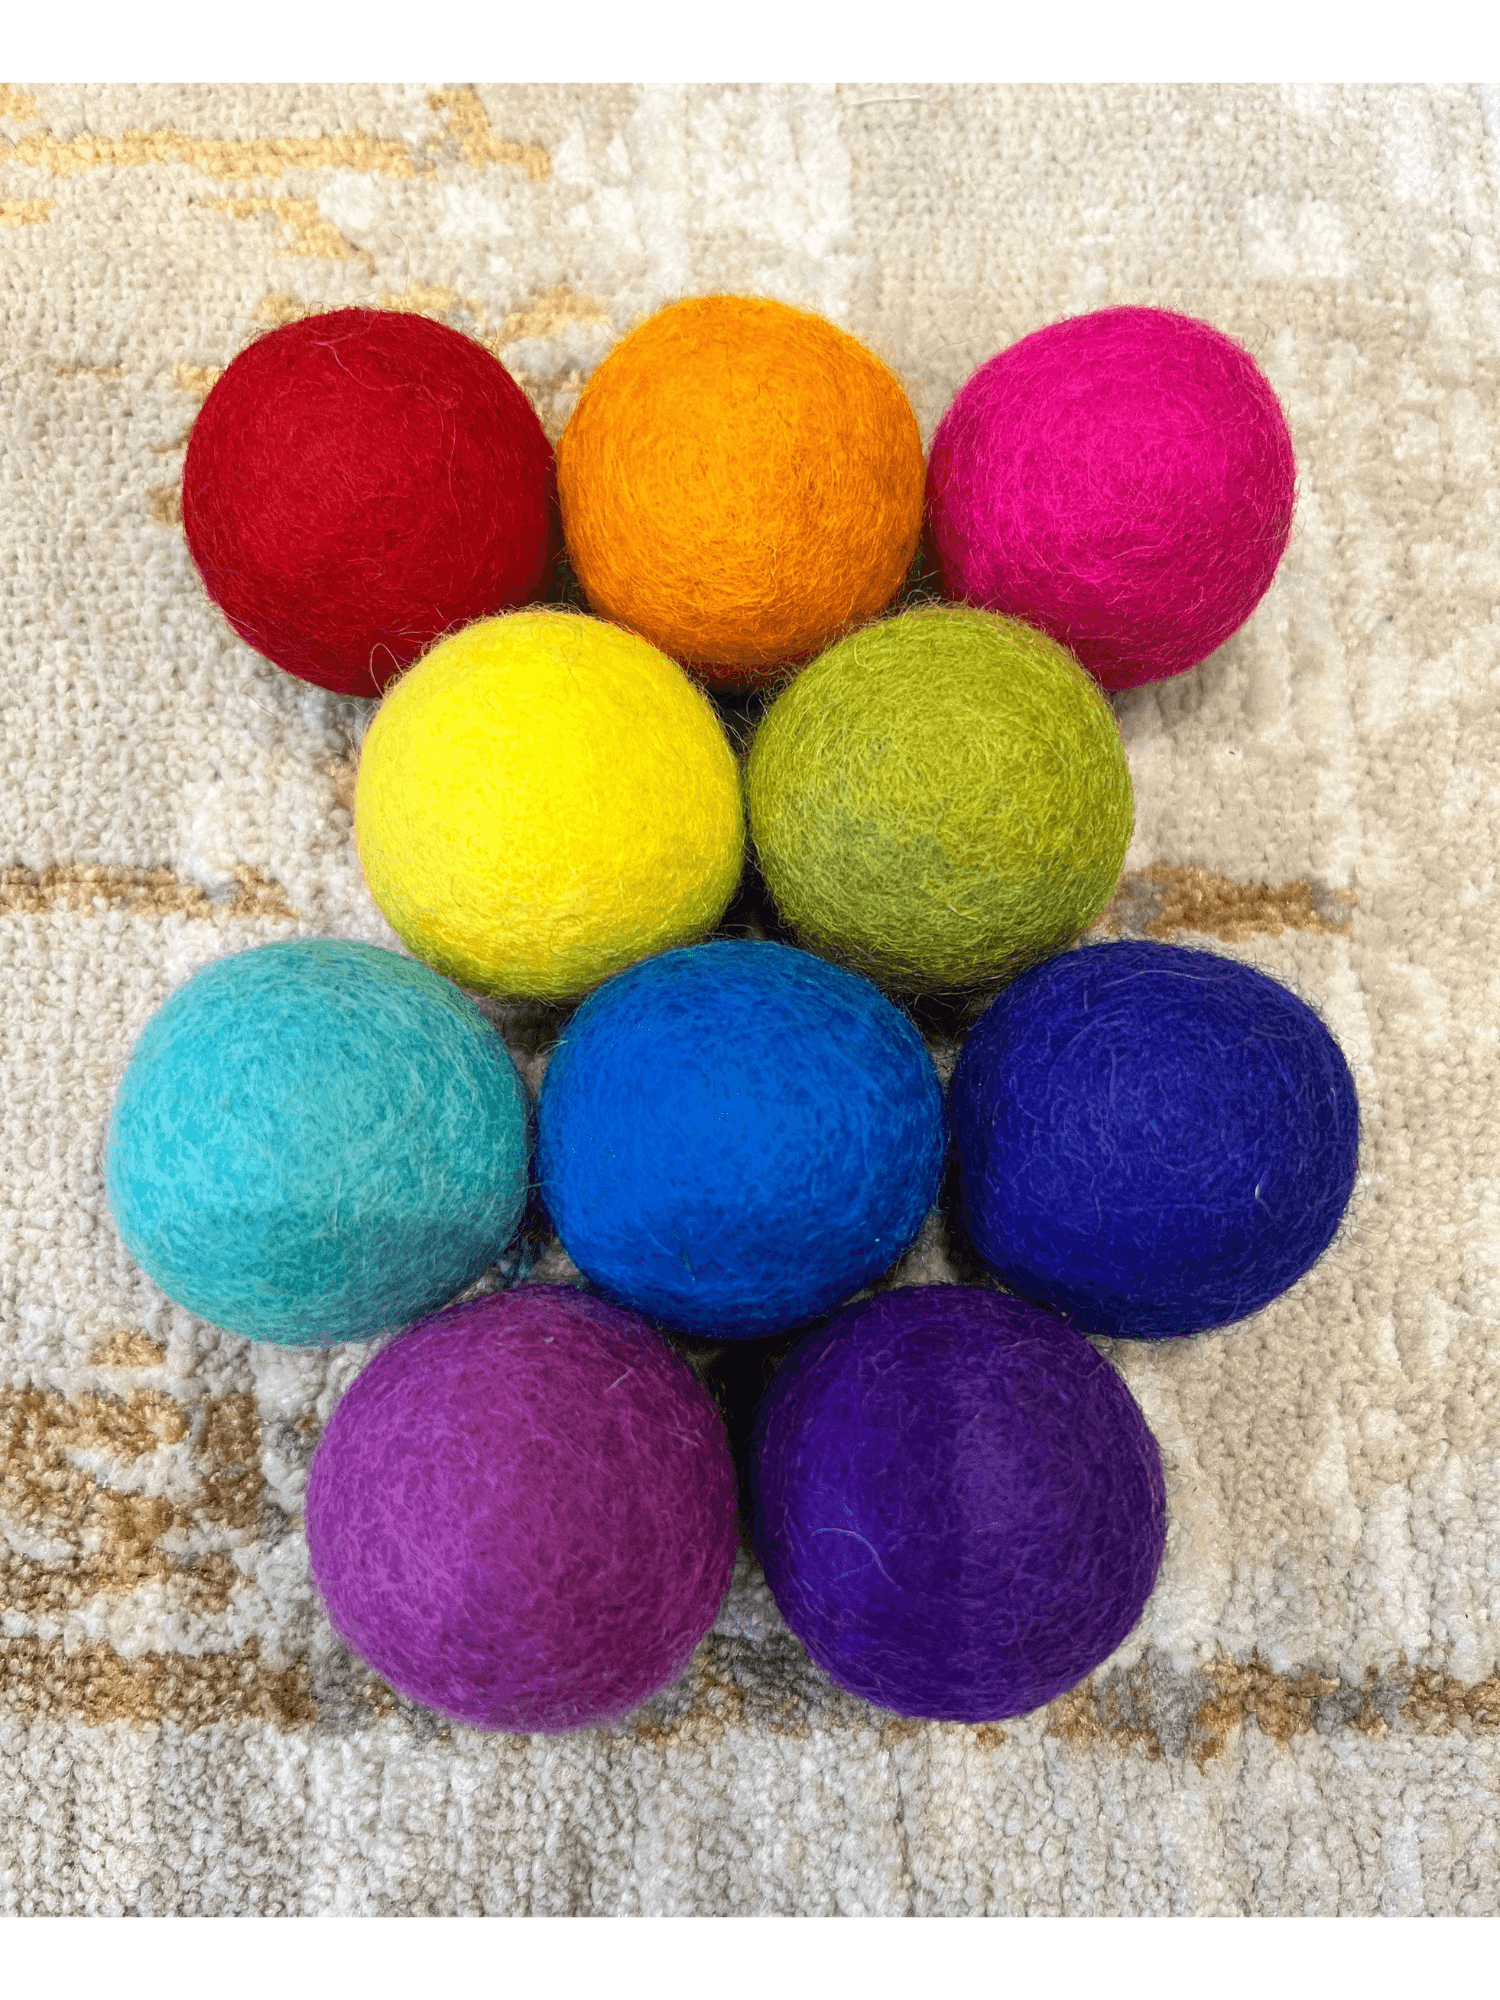 Mix Star, 8-Natur® Wool Felt Balls for Crafts are Tunisia